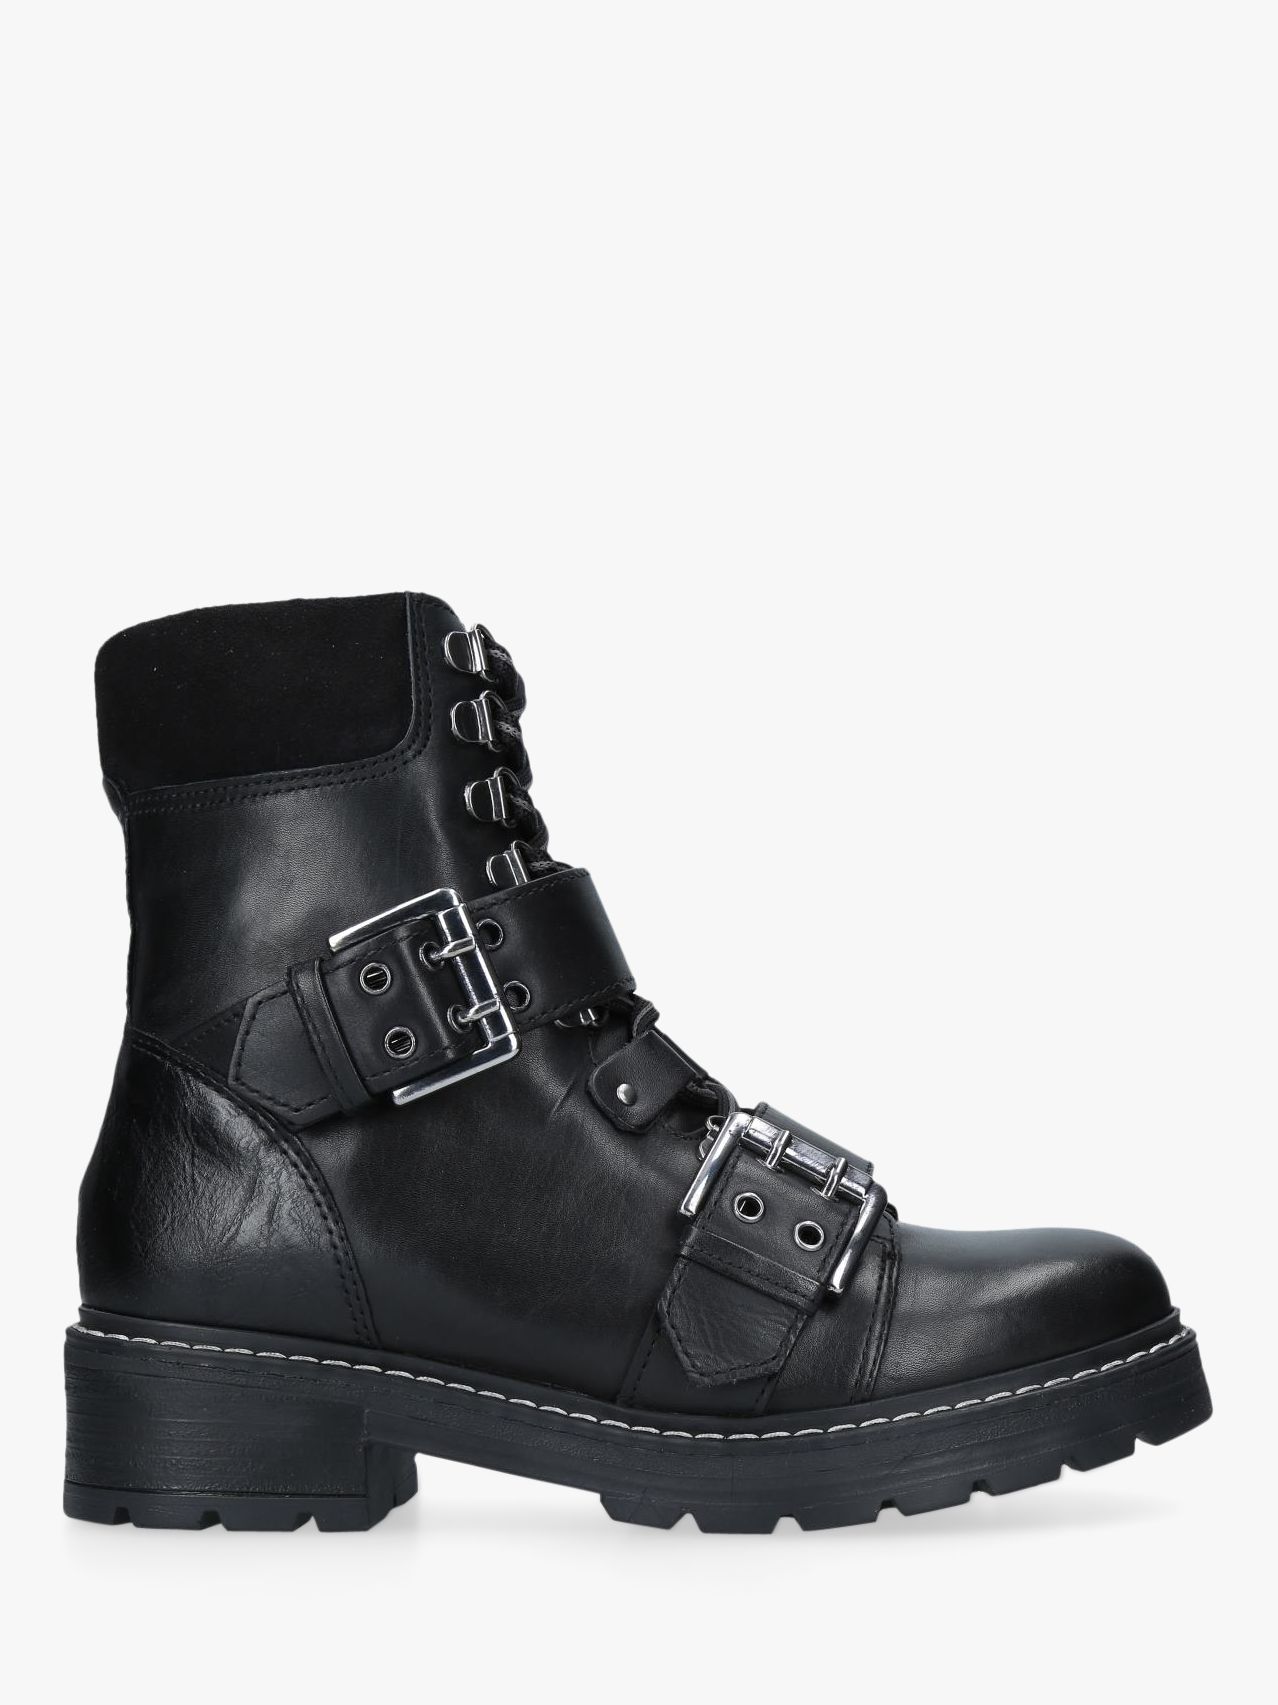 Carvela Saunter Buckle Ankle Boots, Black Leather at John Lewis & Partners